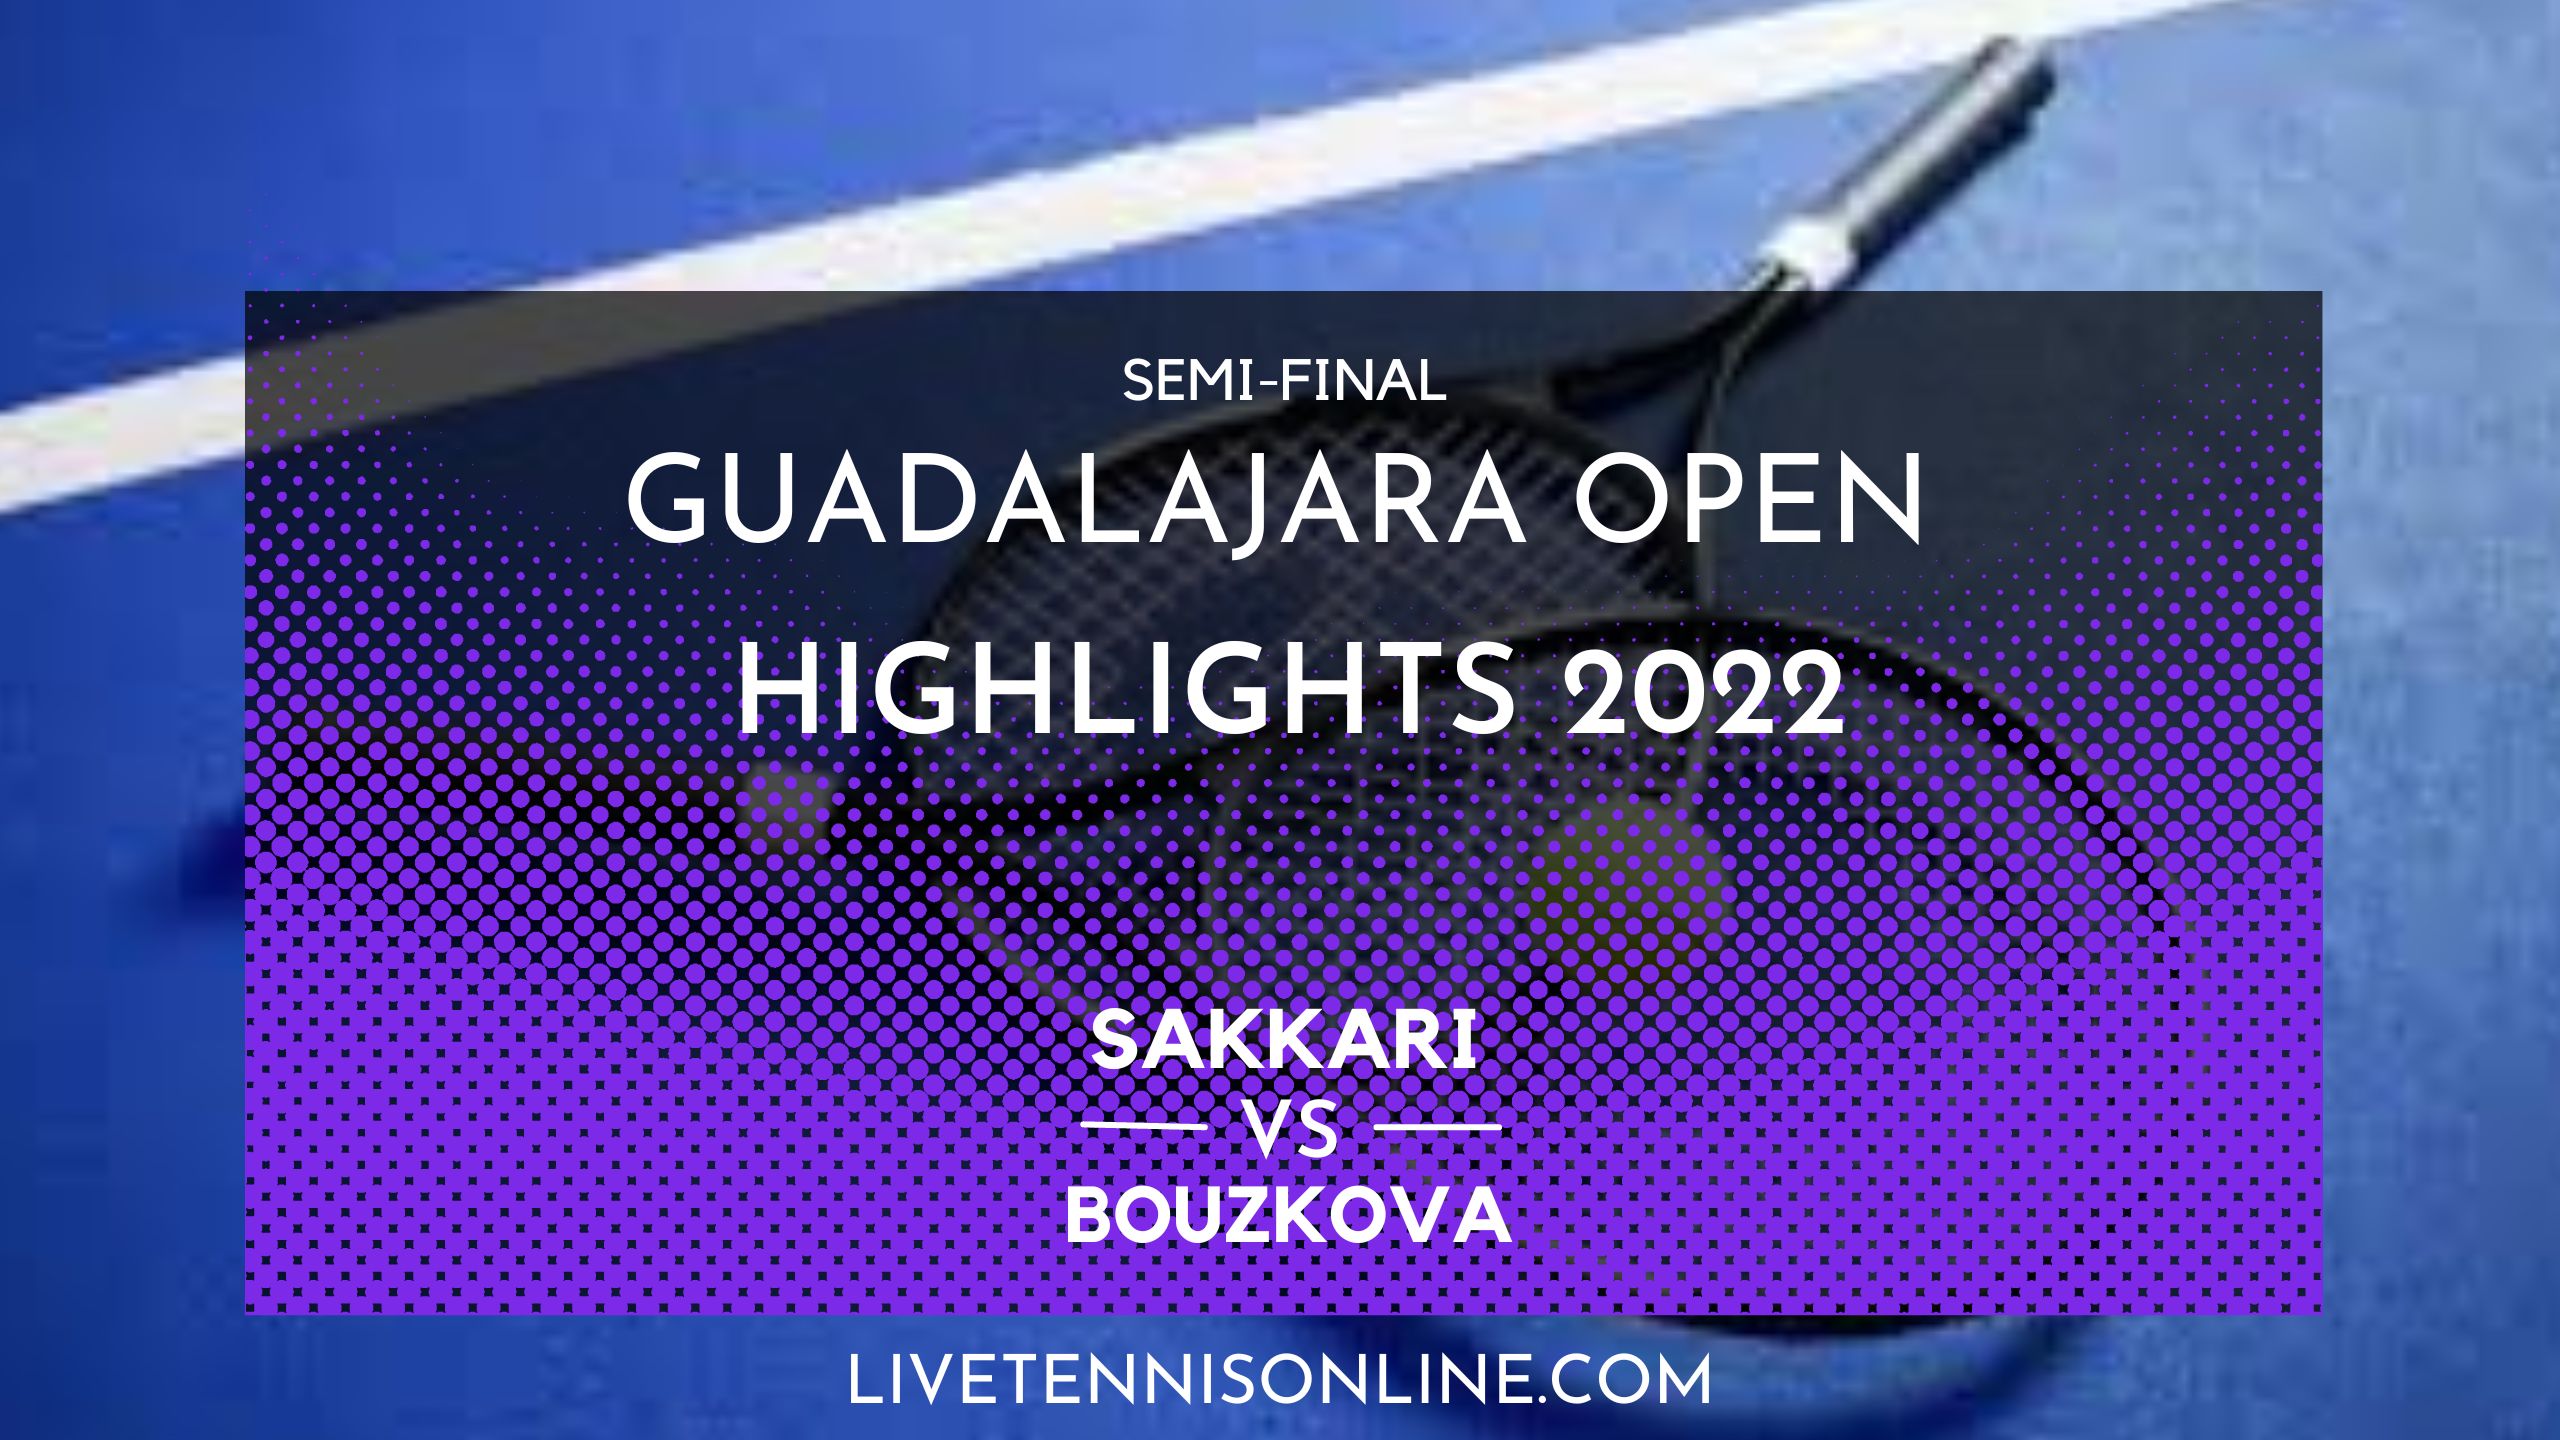 Sakkari Vs Bouzkova SF Highlights 2022 Guadalajara Open